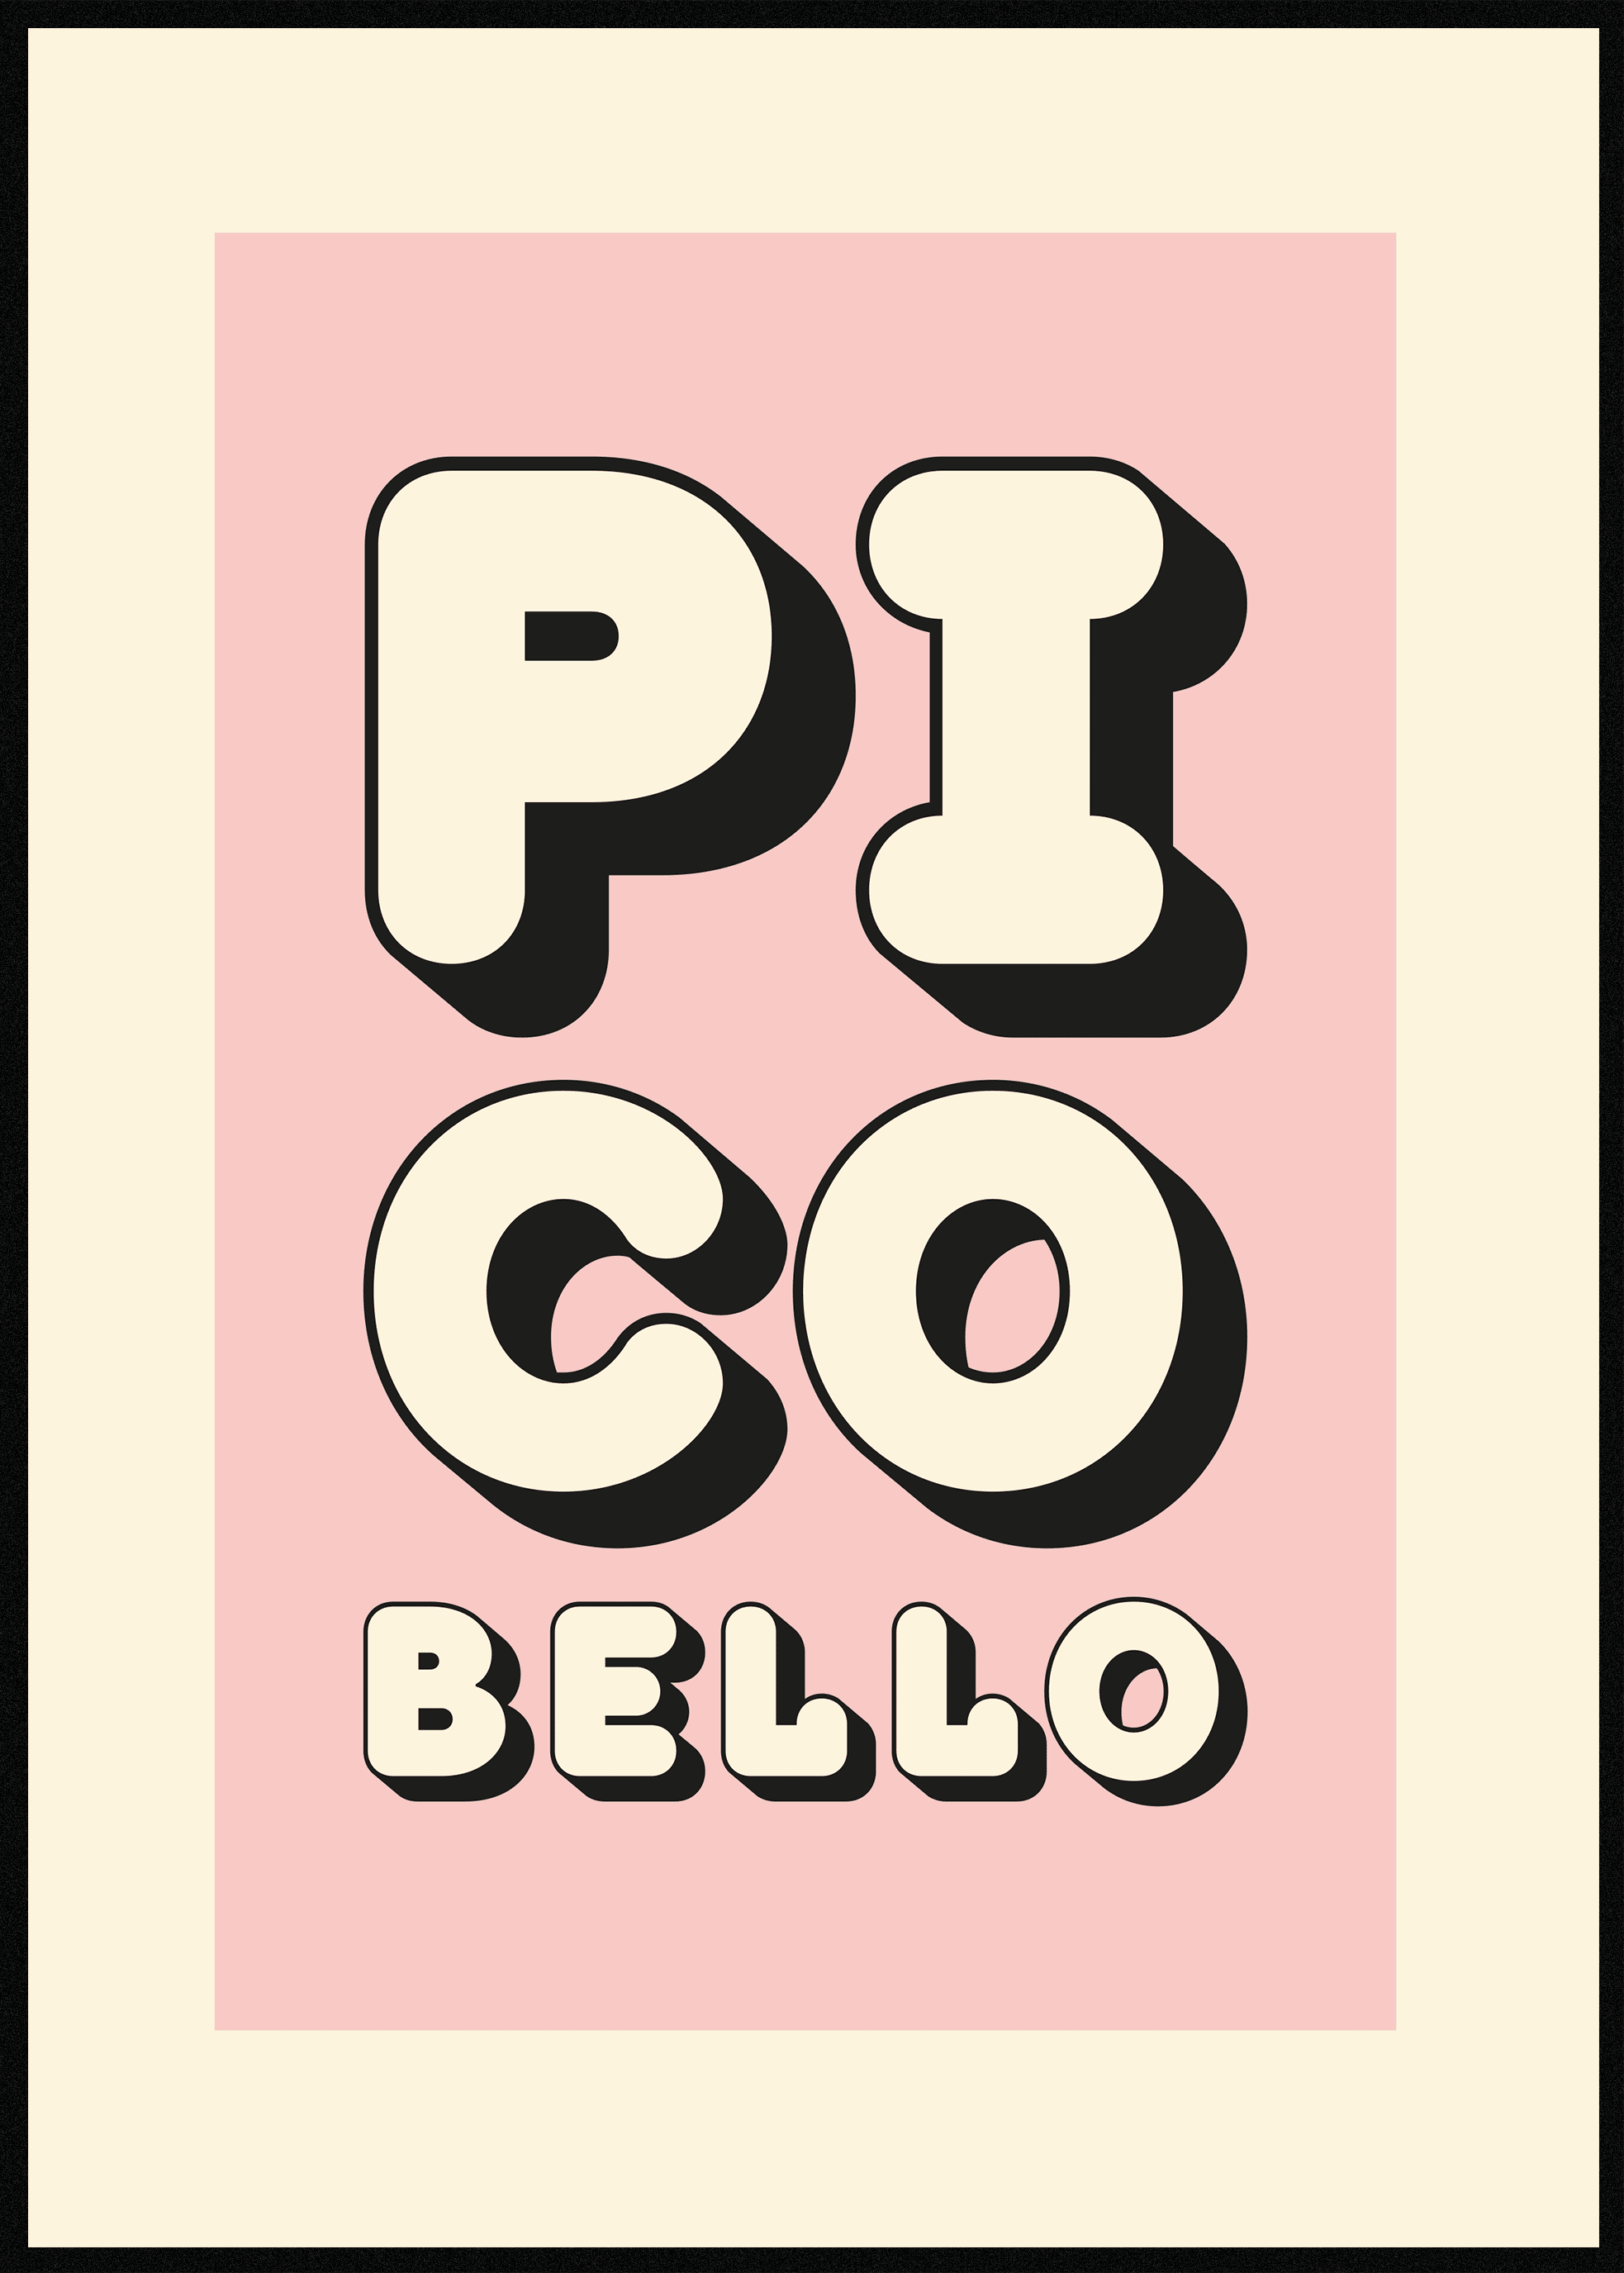 Poster Picobello